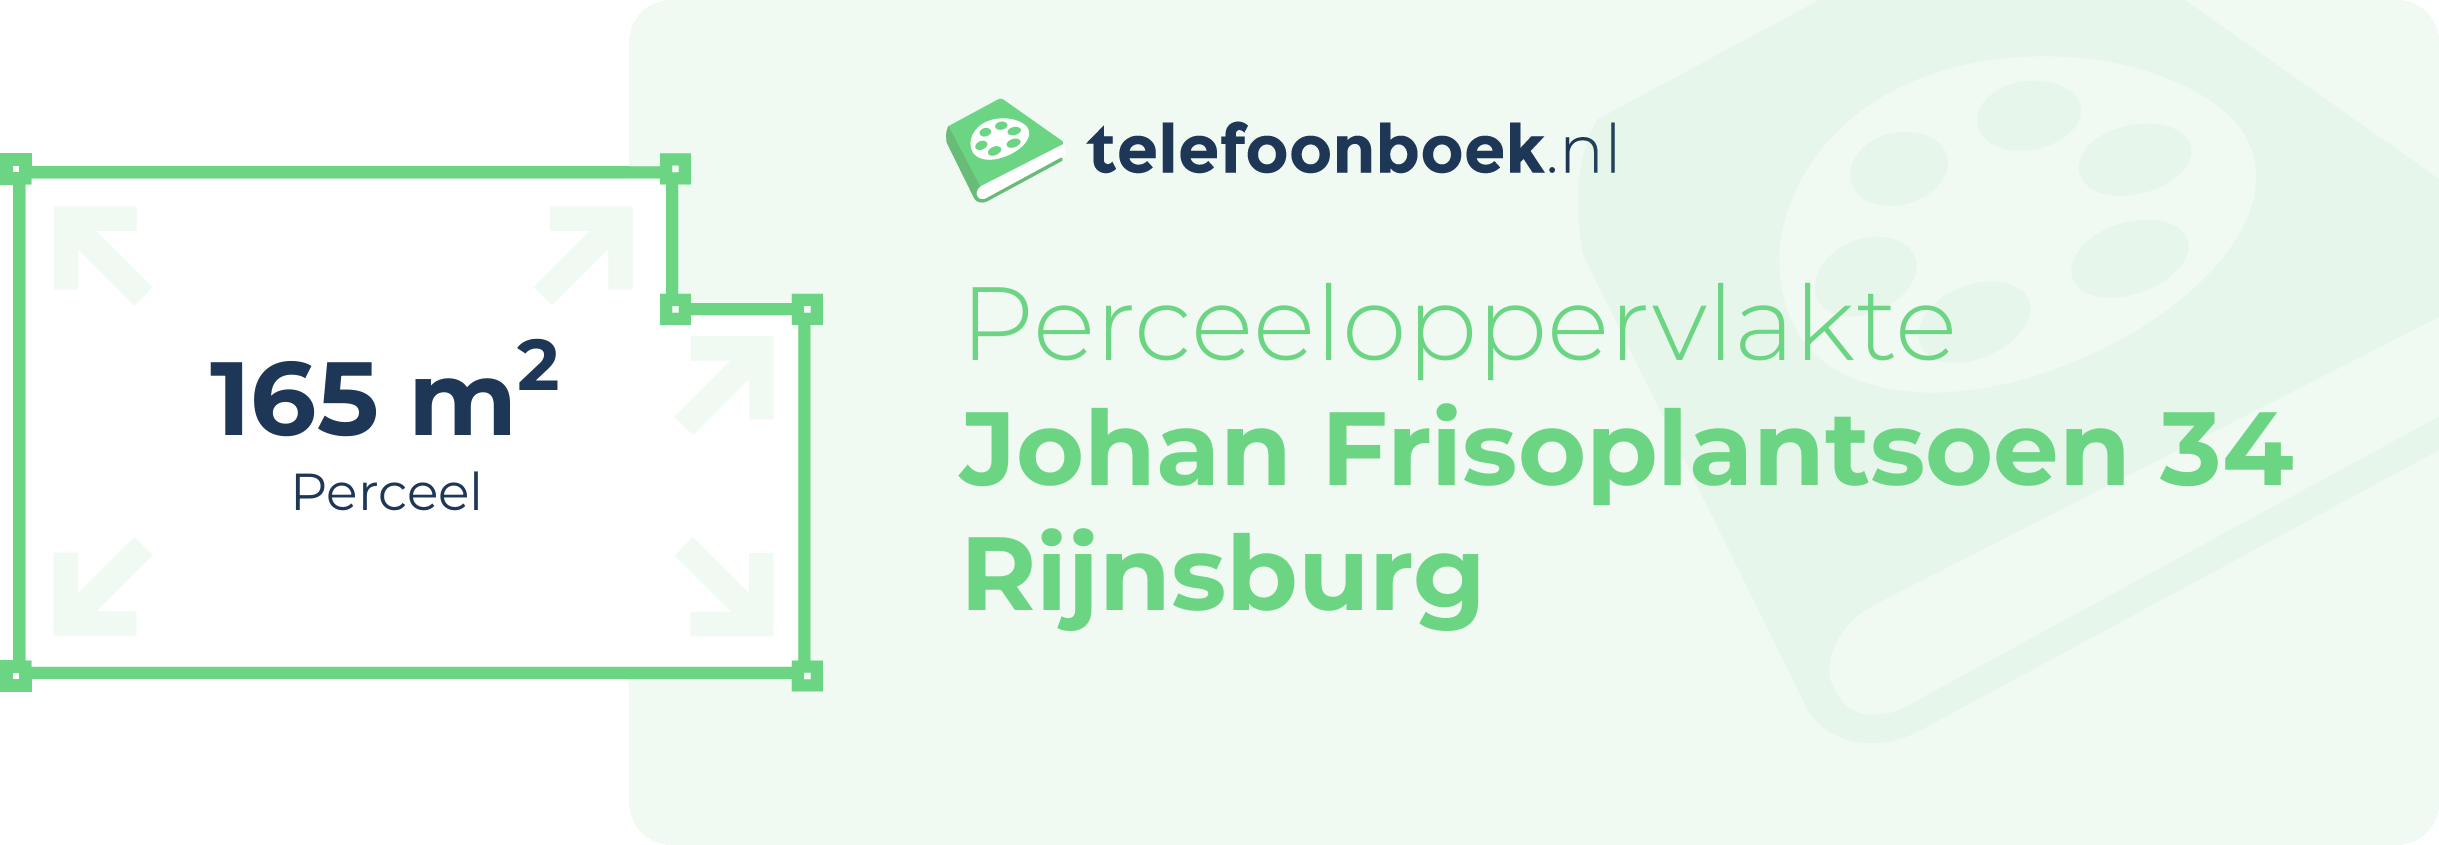 Perceeloppervlakte Johan Frisoplantsoen 34 Rijnsburg